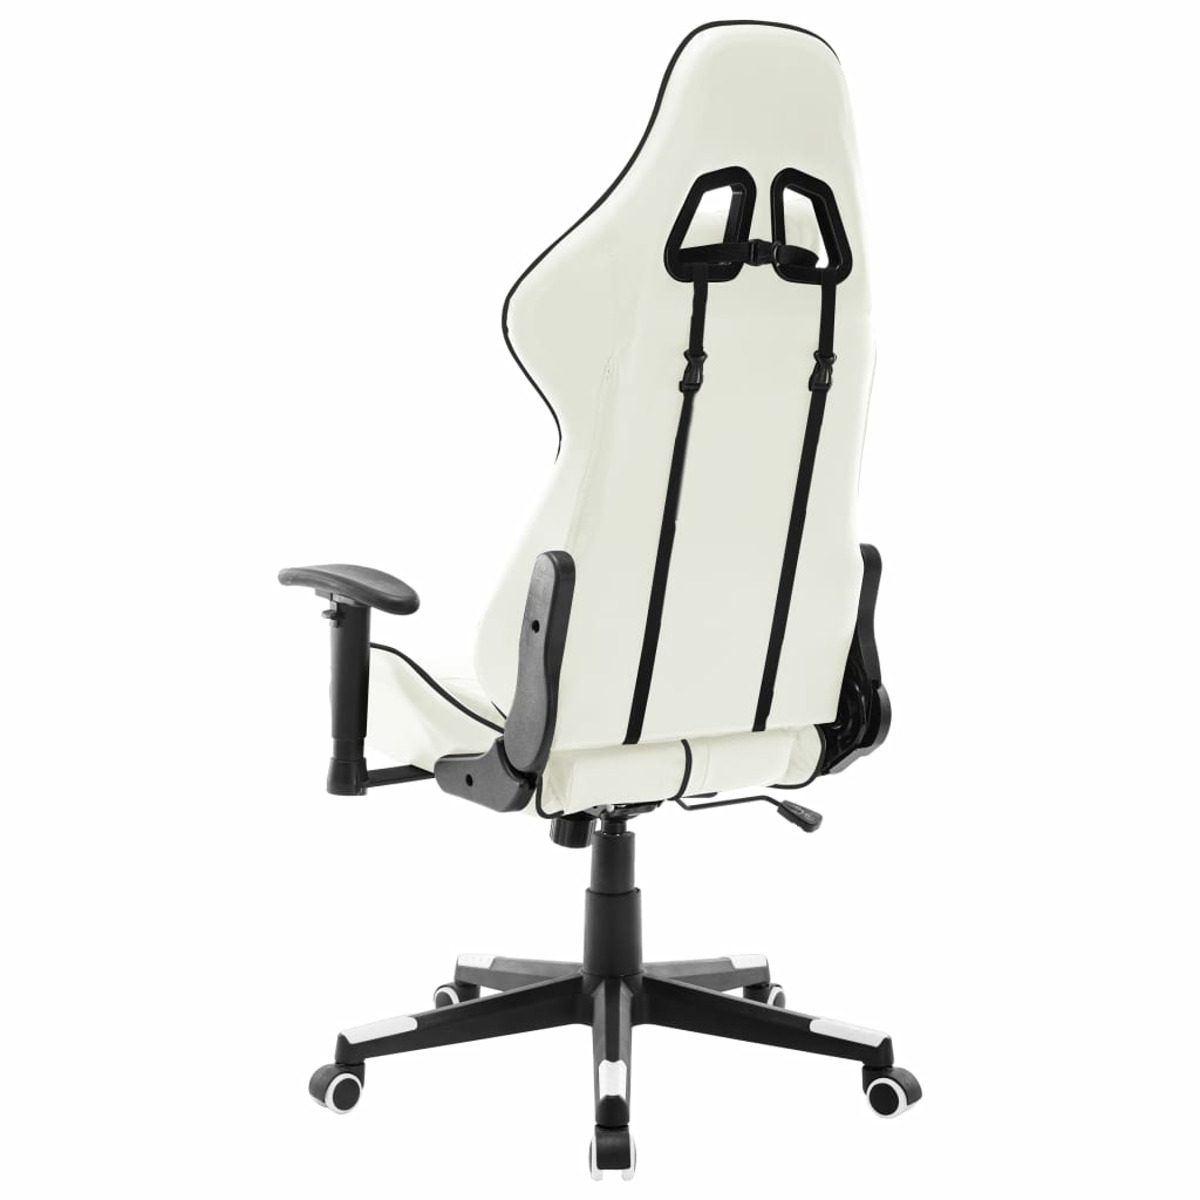 VIDAXL 20535 Gaming Stuhl, Weiß